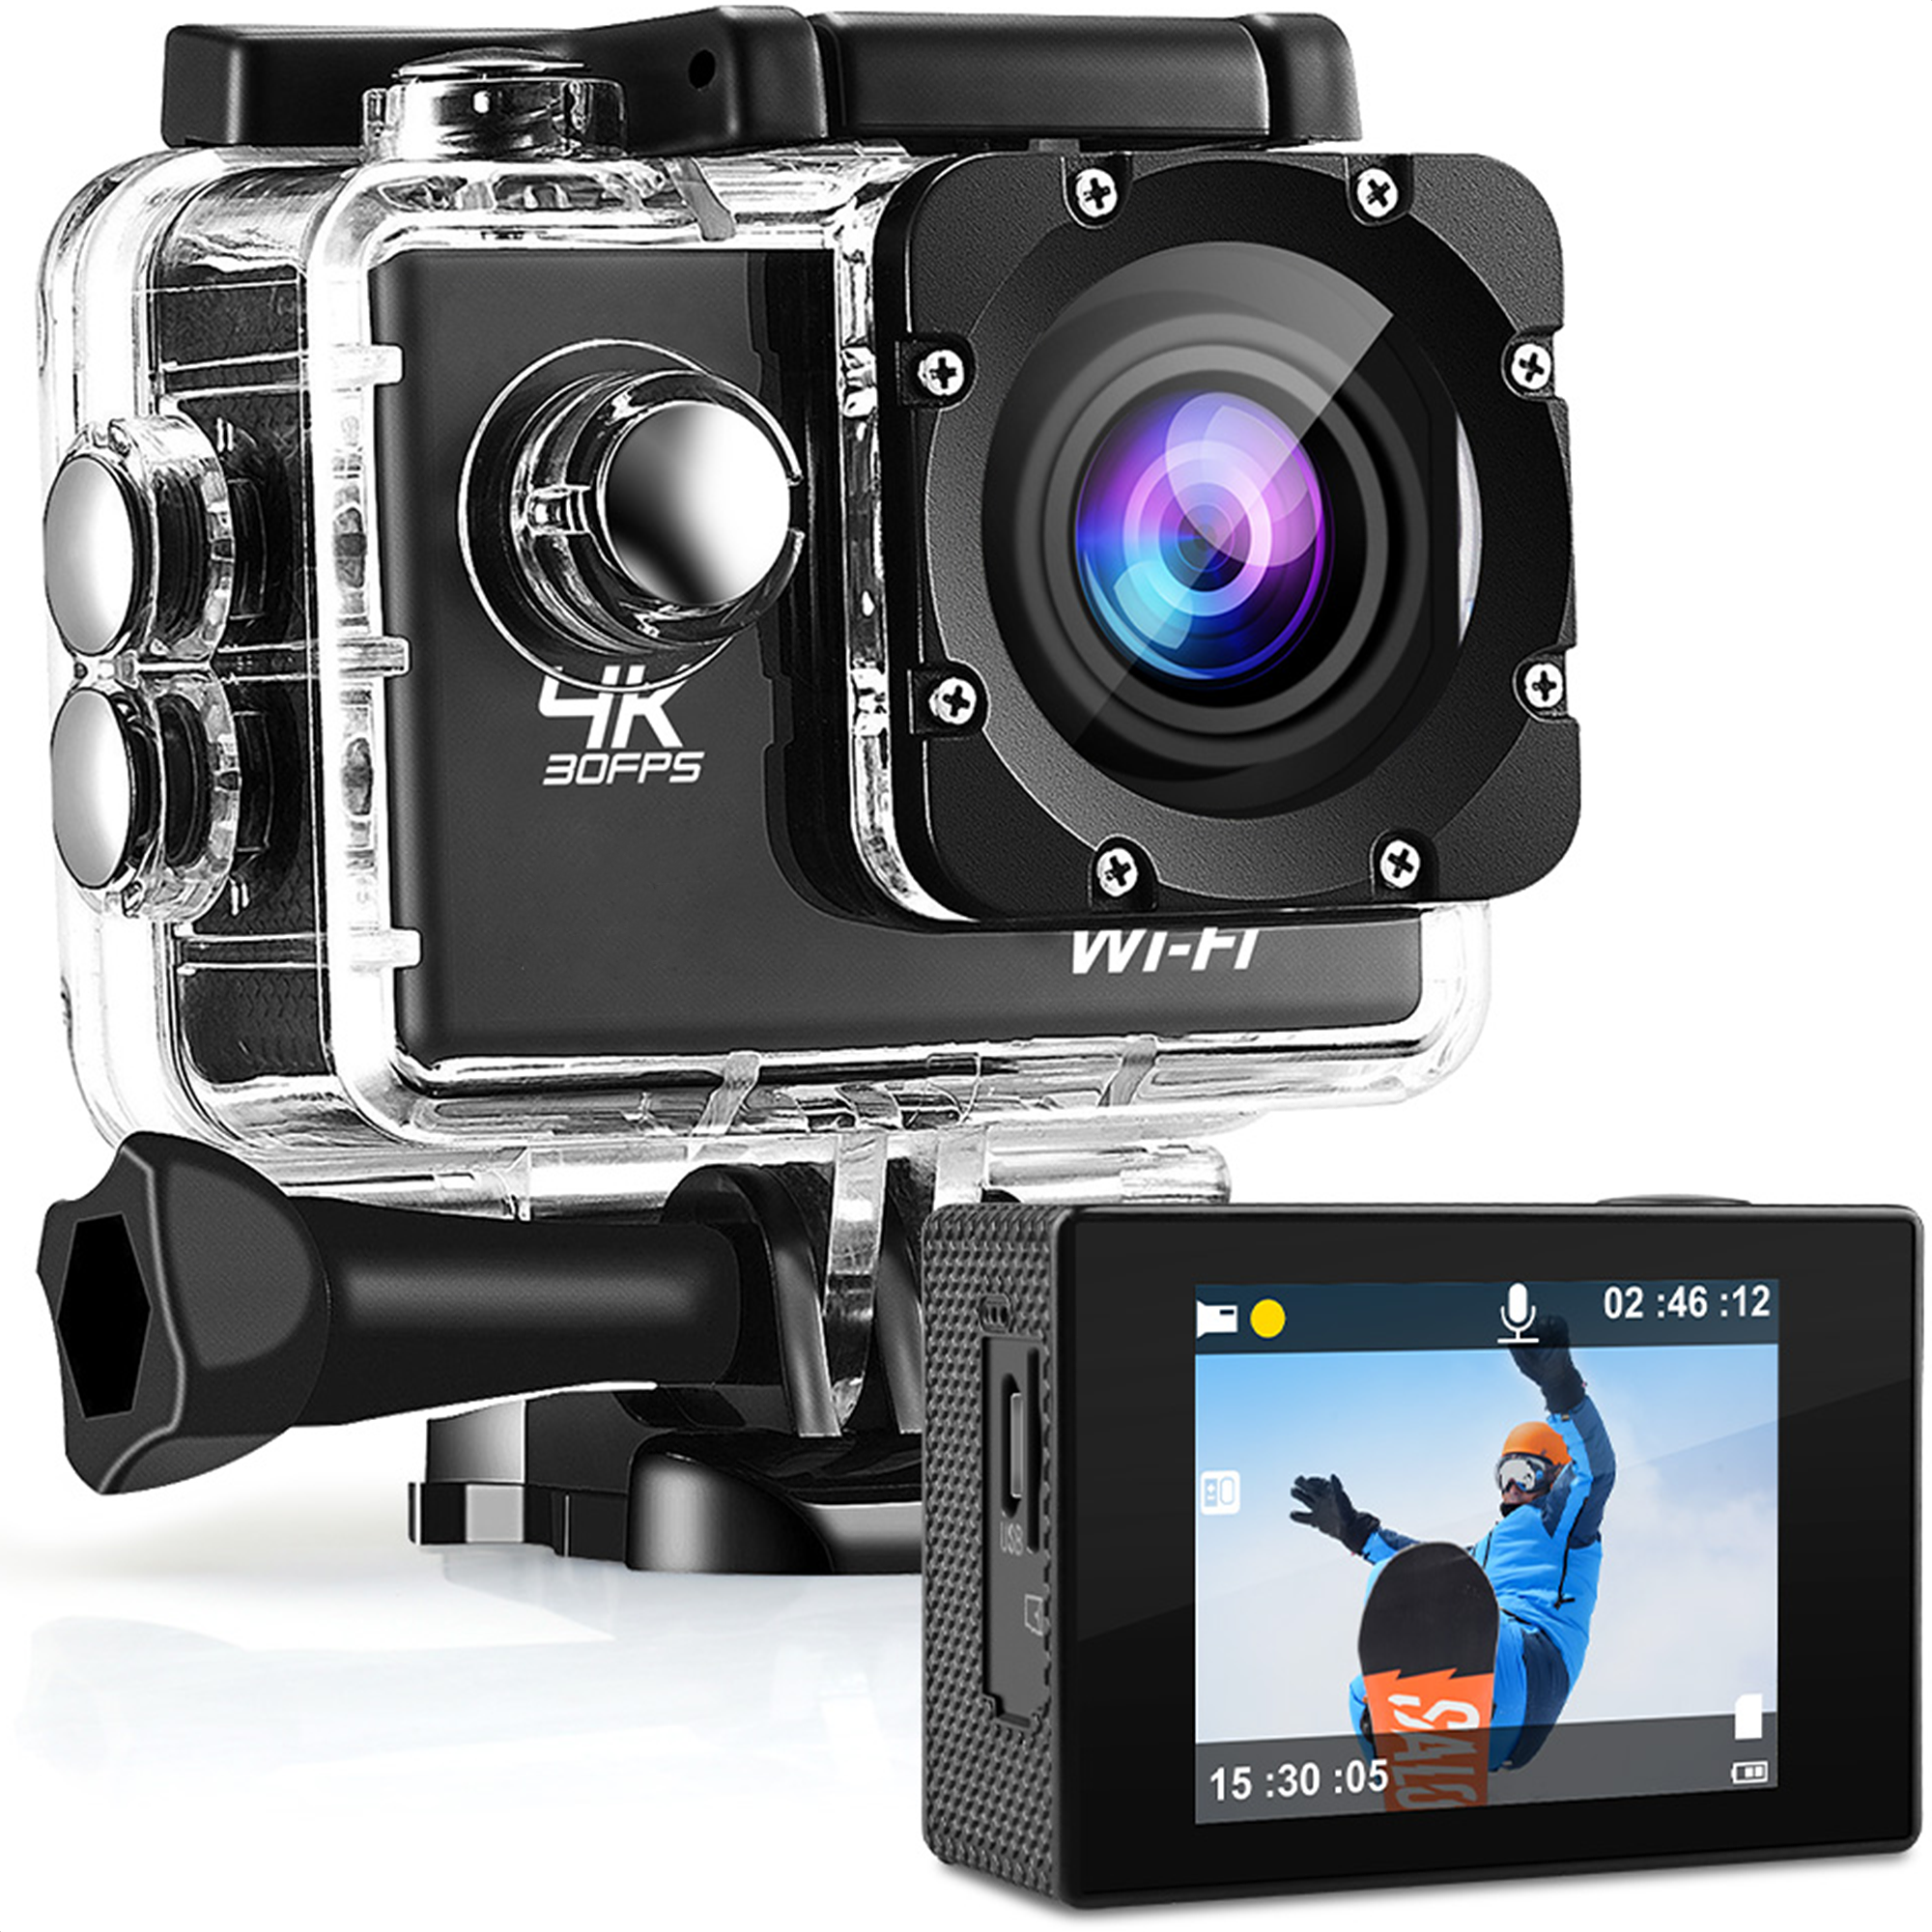 Strex Action Camera 4K 16MP - 60FPS / 30M Waterdicht / WiFi - Inclusief Accessoires - Actiecamera -